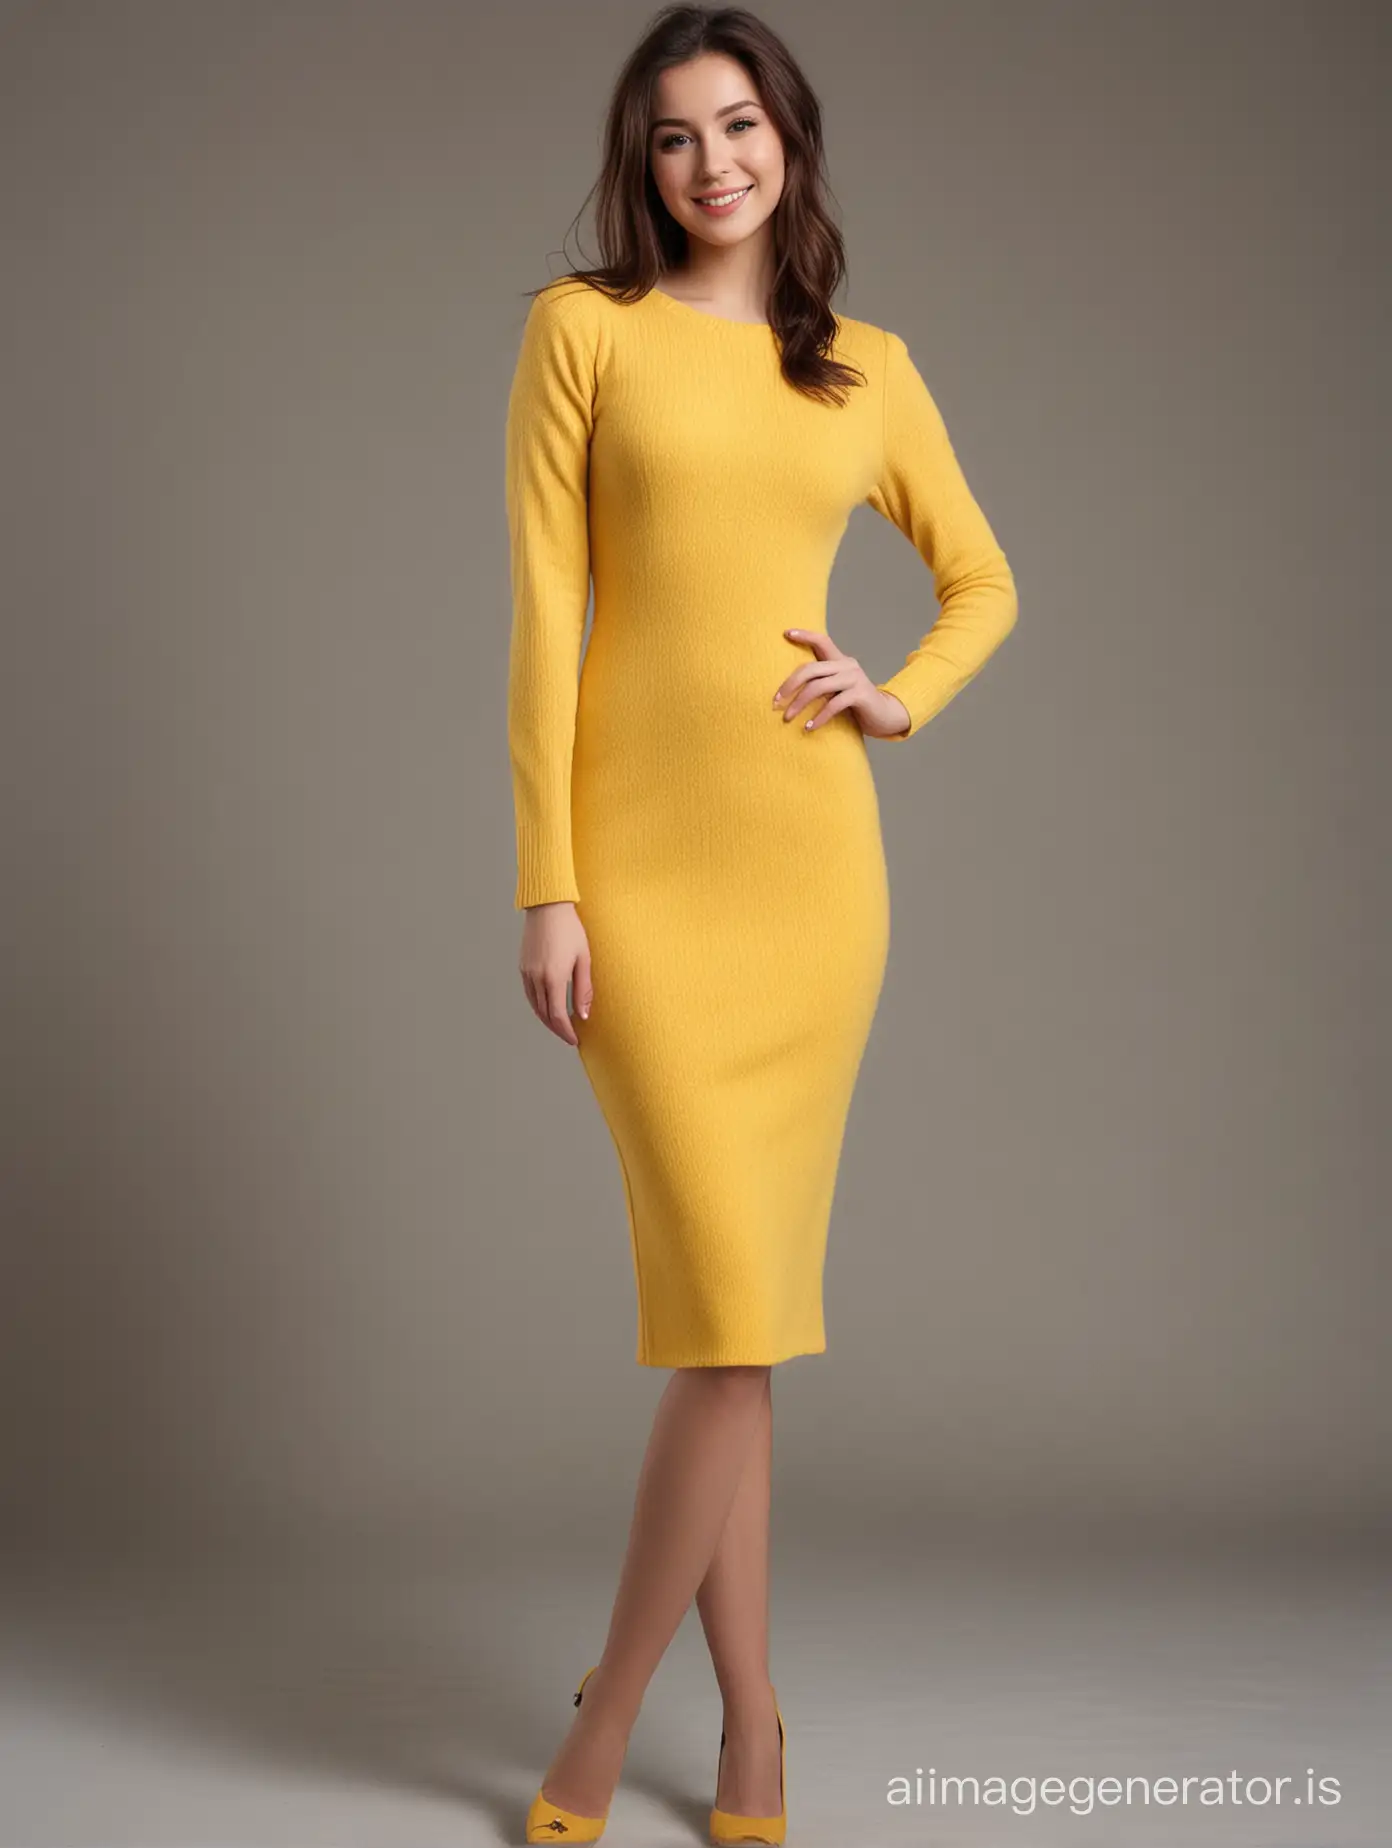 Elegant-Yellow-Dress-Fashion-Model-Posing-with-Seductive-Smile